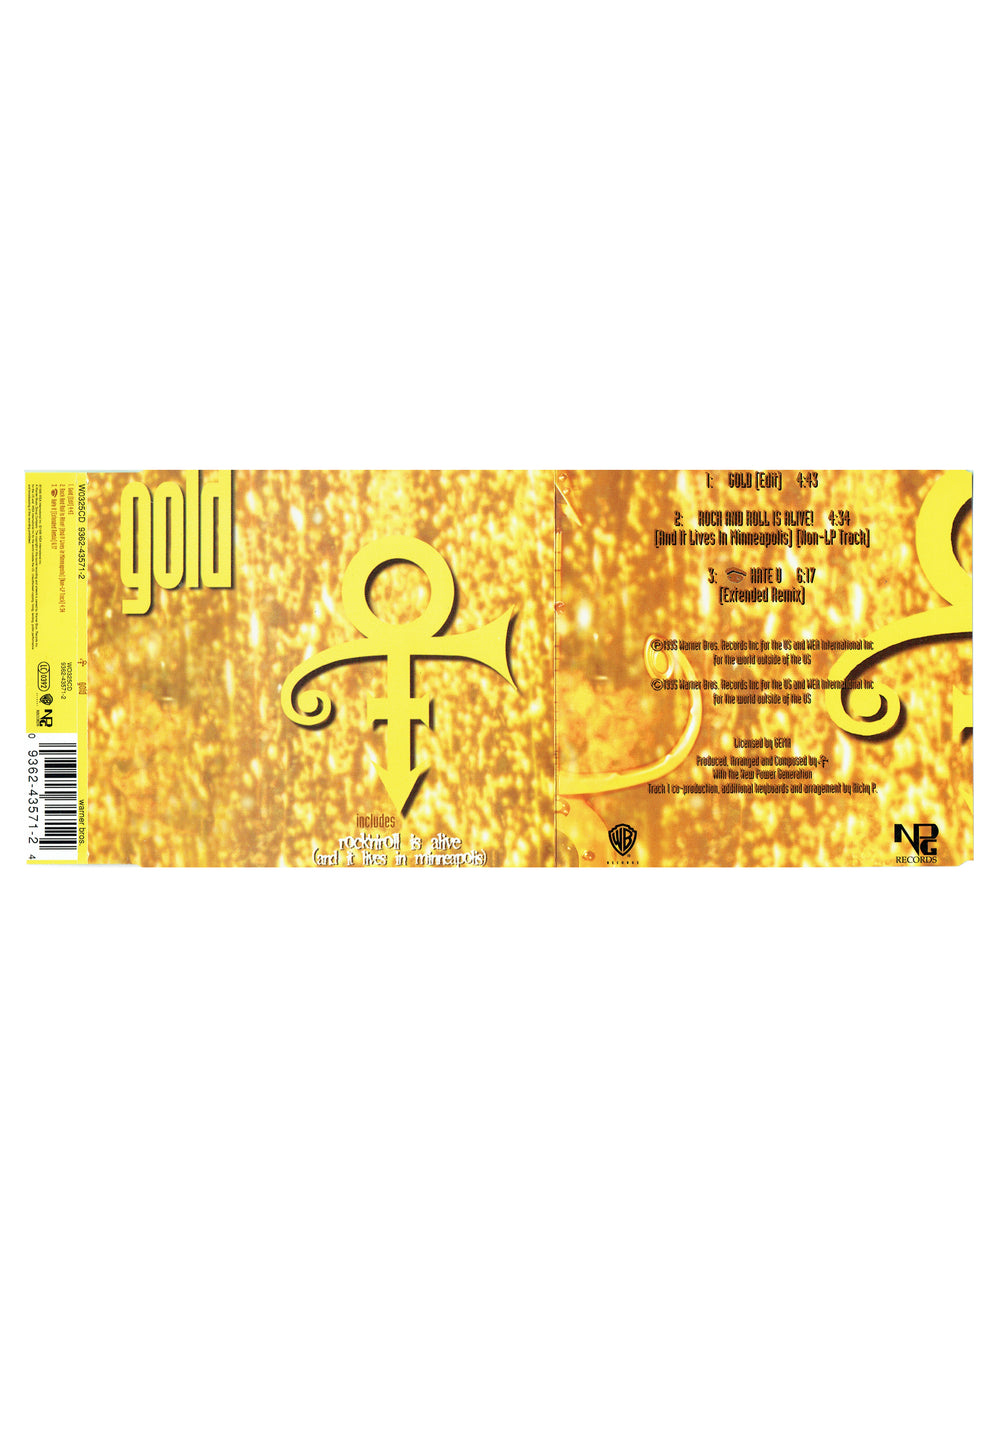 Prince Gold Rock And Roll Is Alive I Hate U Remix UK CD Single 1995 Original